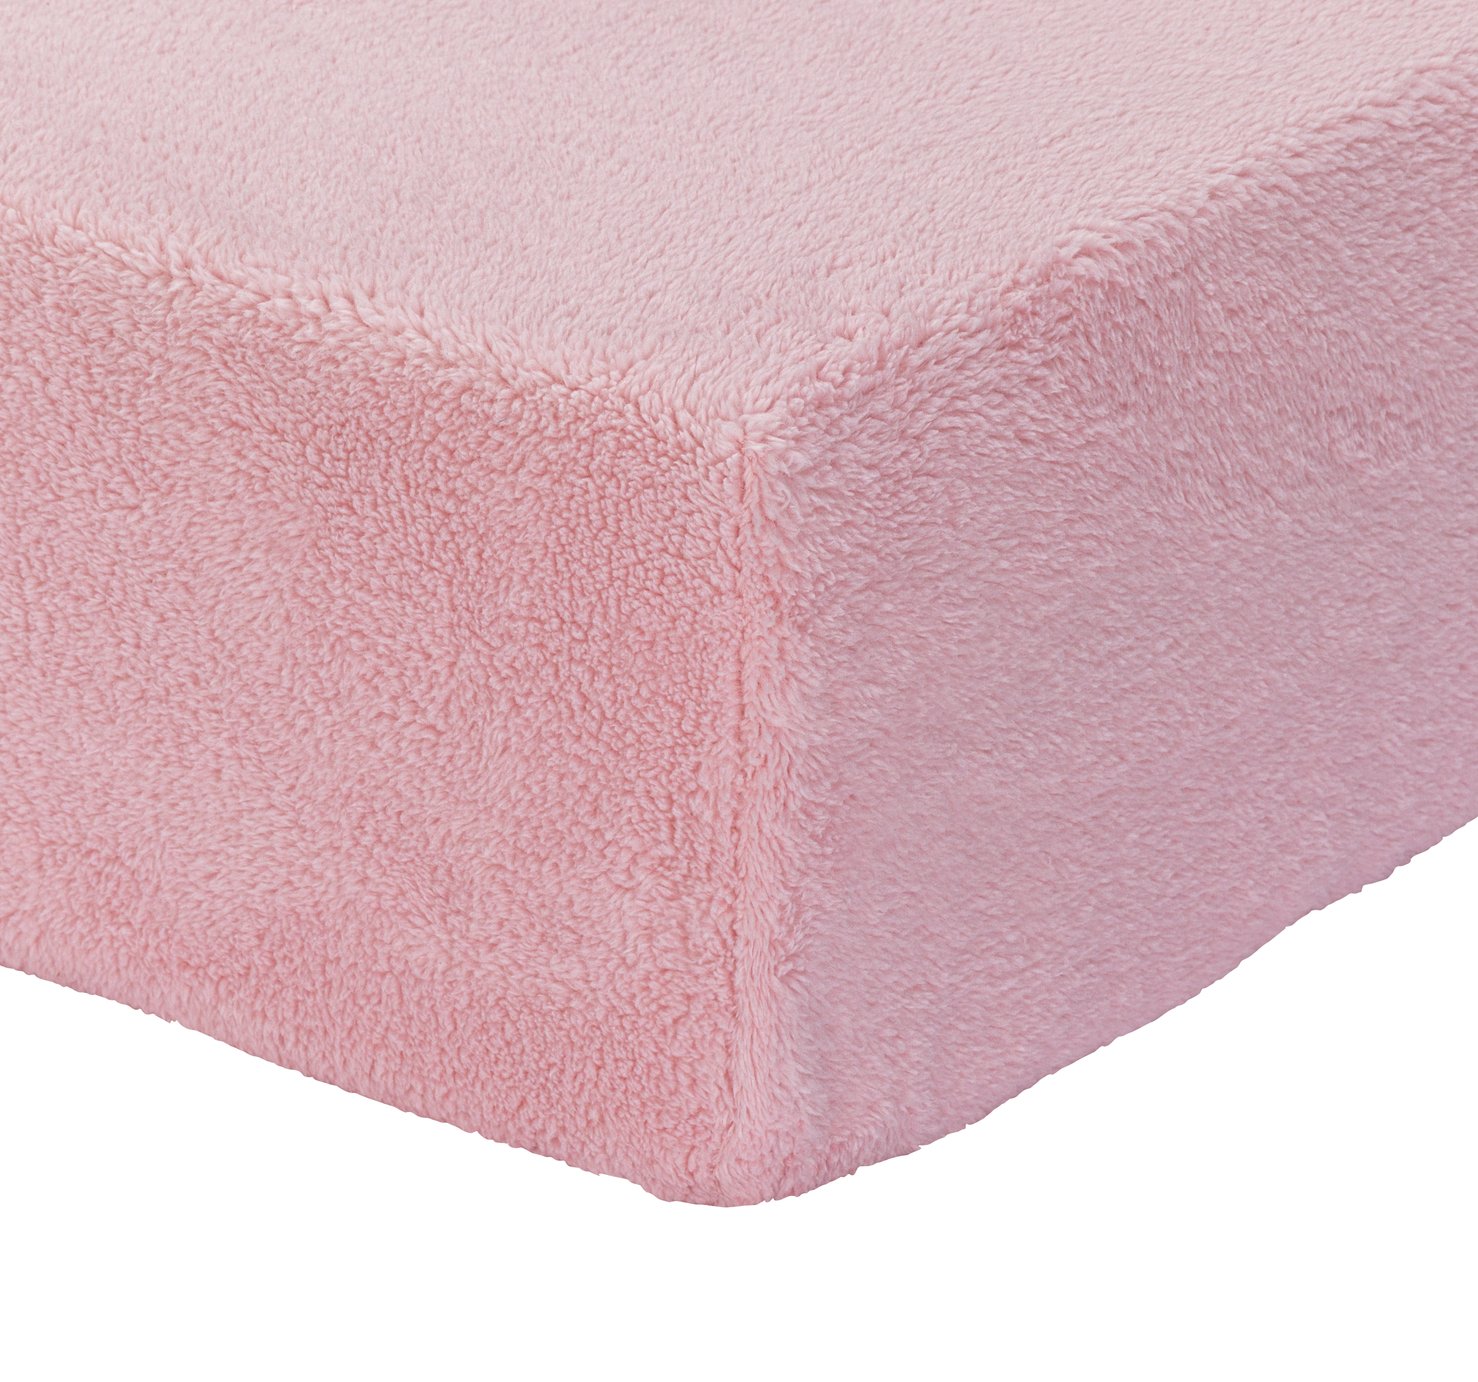 Argos Home Fleece Pale Pink Fitted Sheet - Single